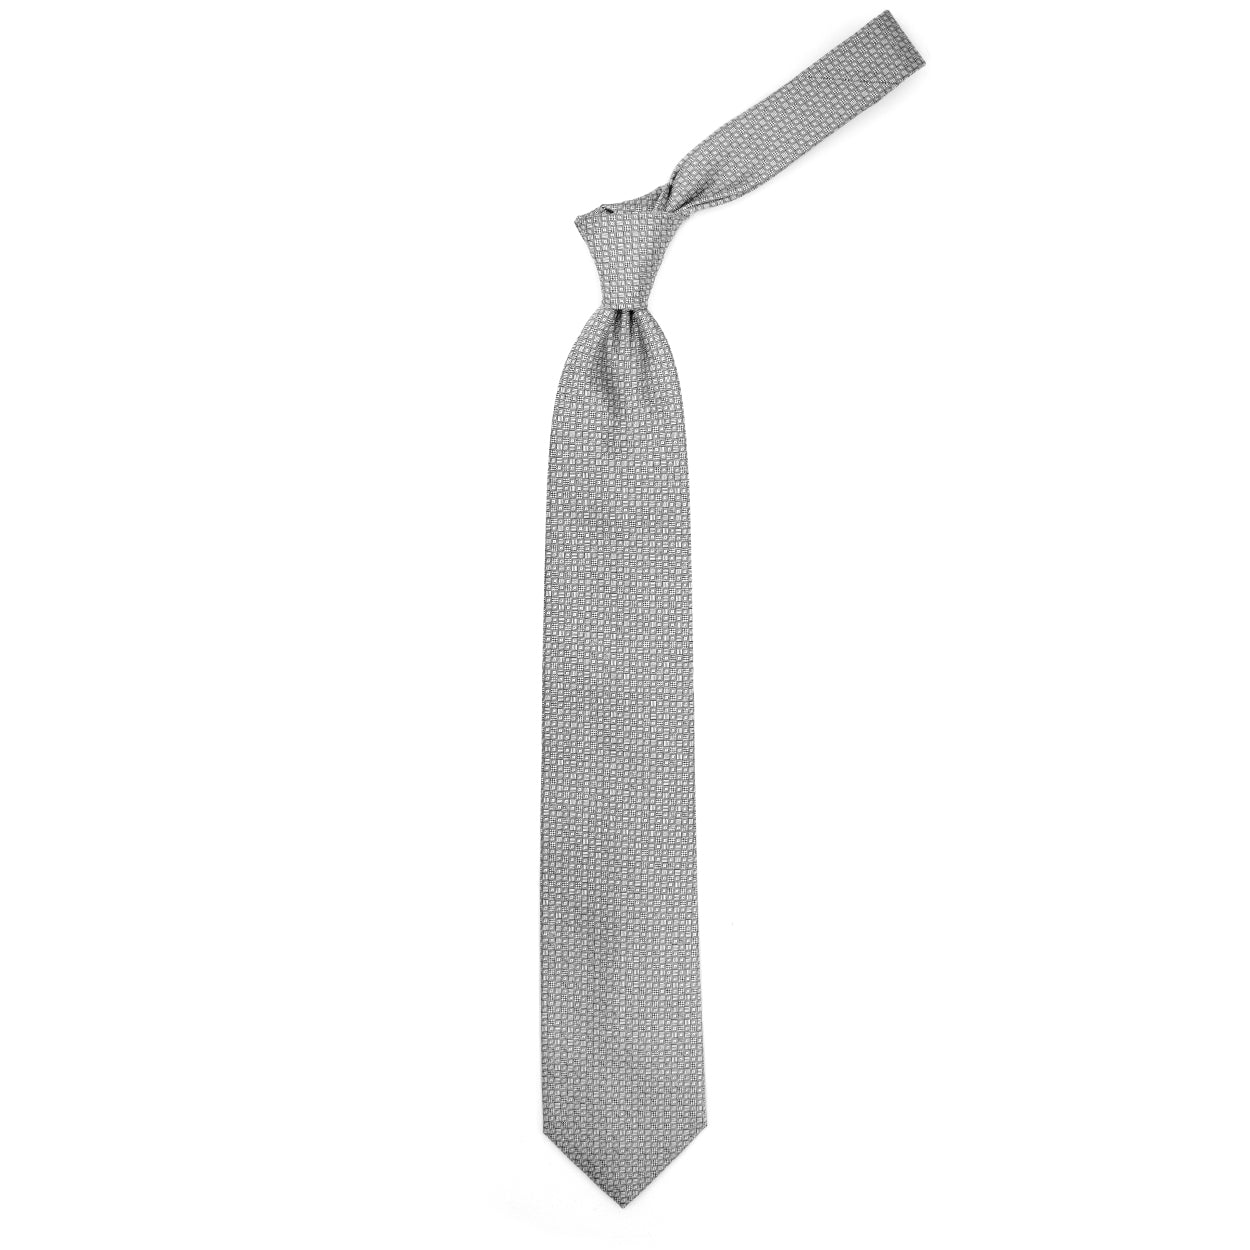 Cravatta grigia con quadratini bianchi e neri